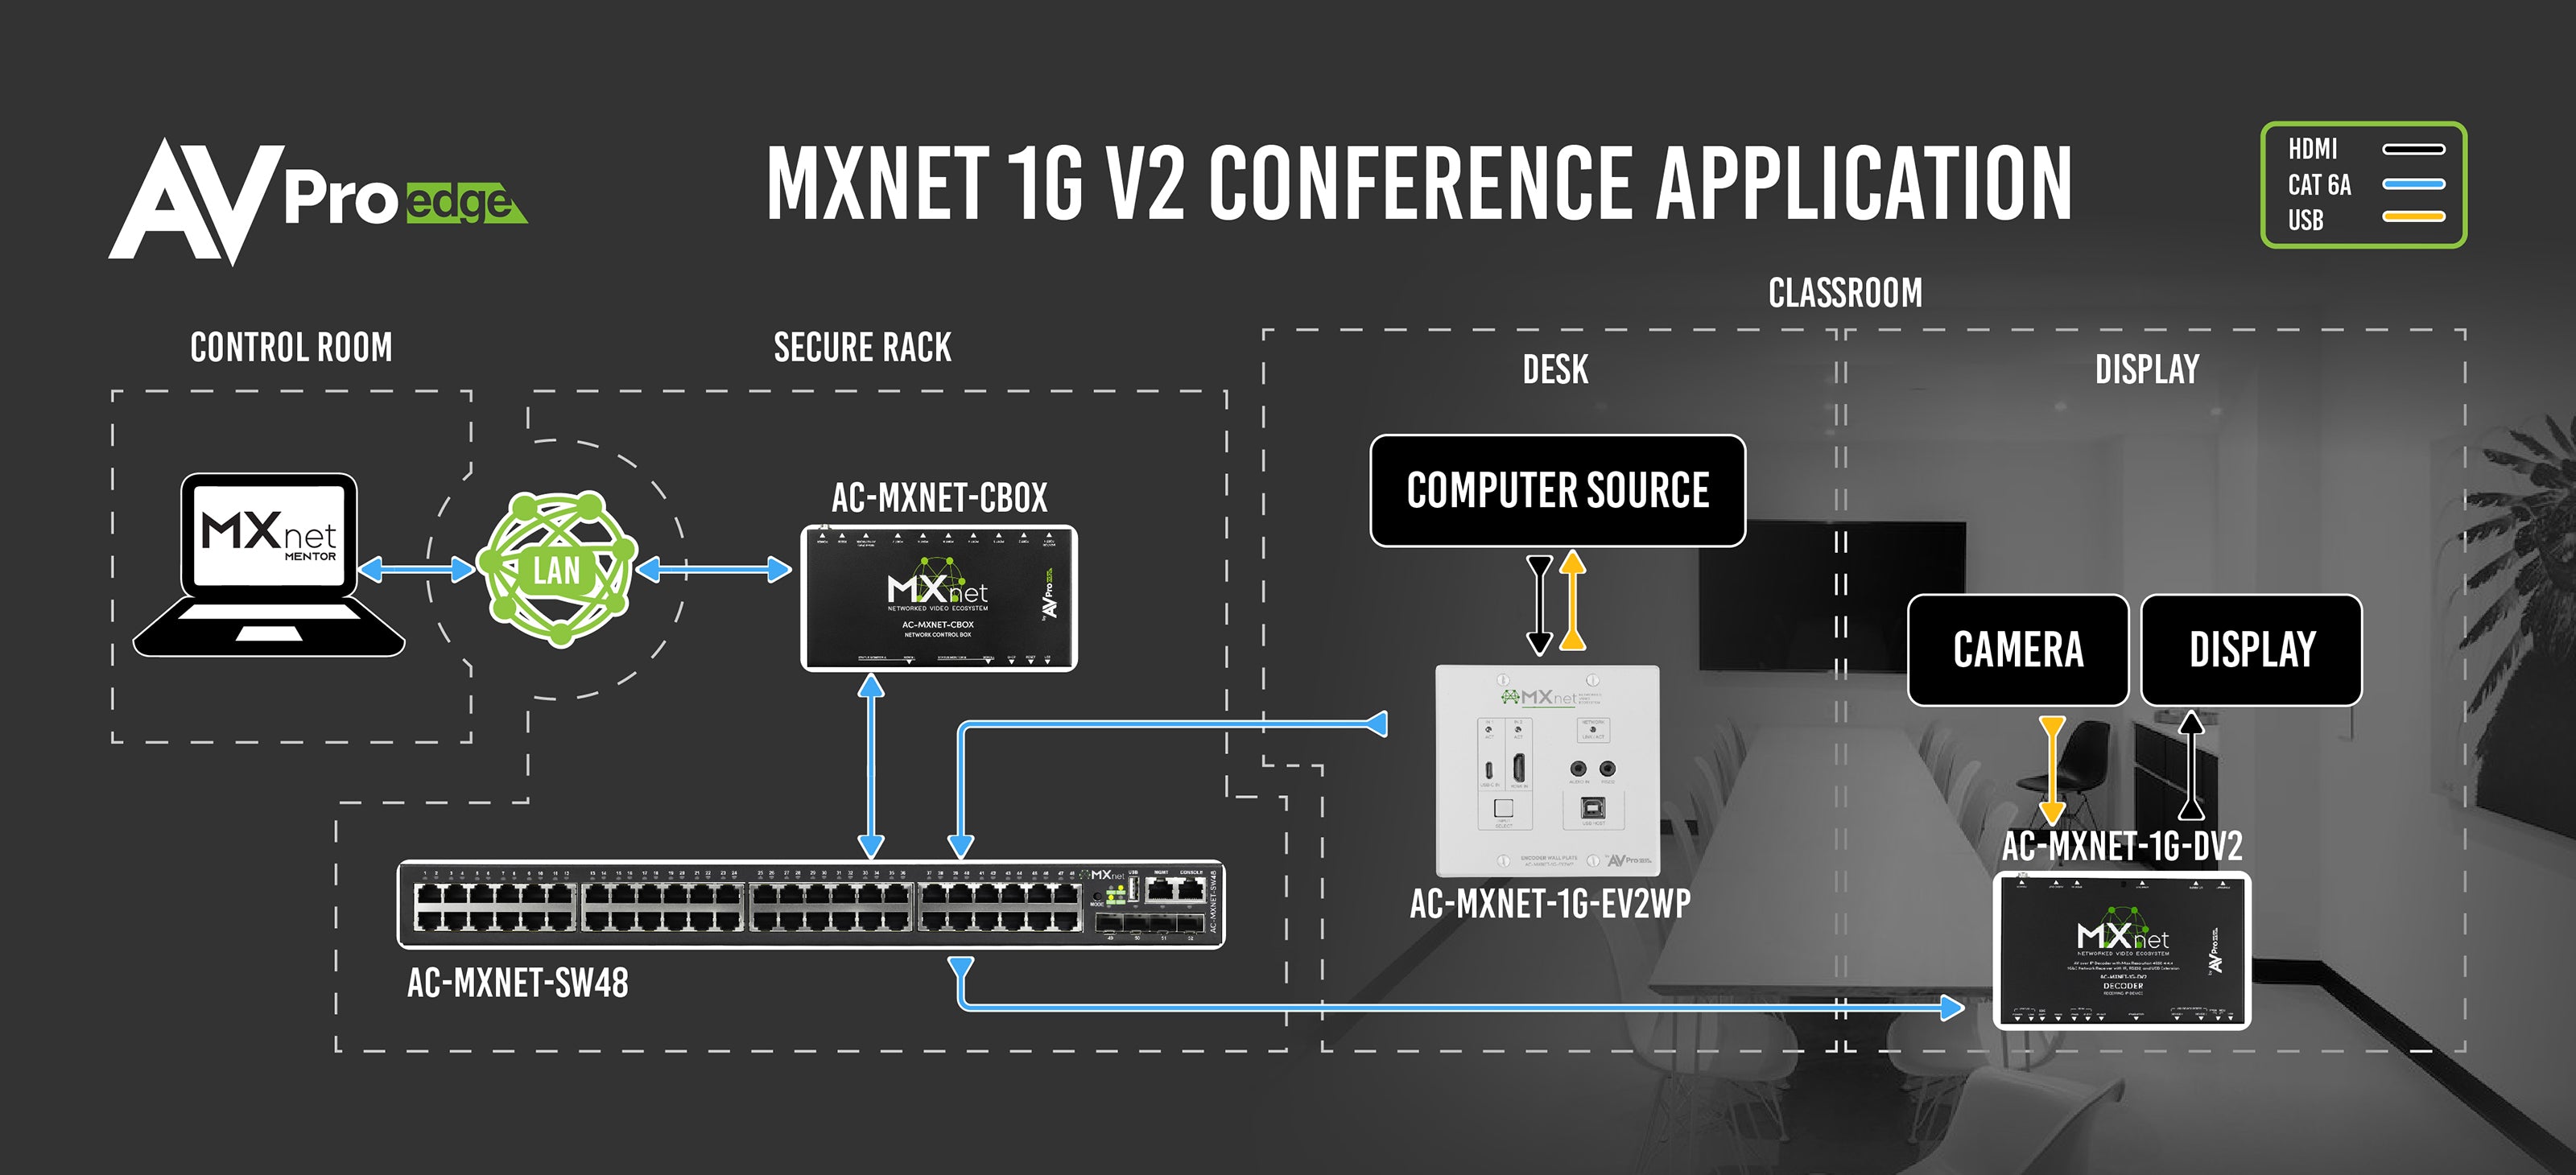 AC-MXNET-1G-EV2WP_Conference_camera_application_Diagram-01_small_2f777193-8b57-4429-9f72-7d905b1a1809